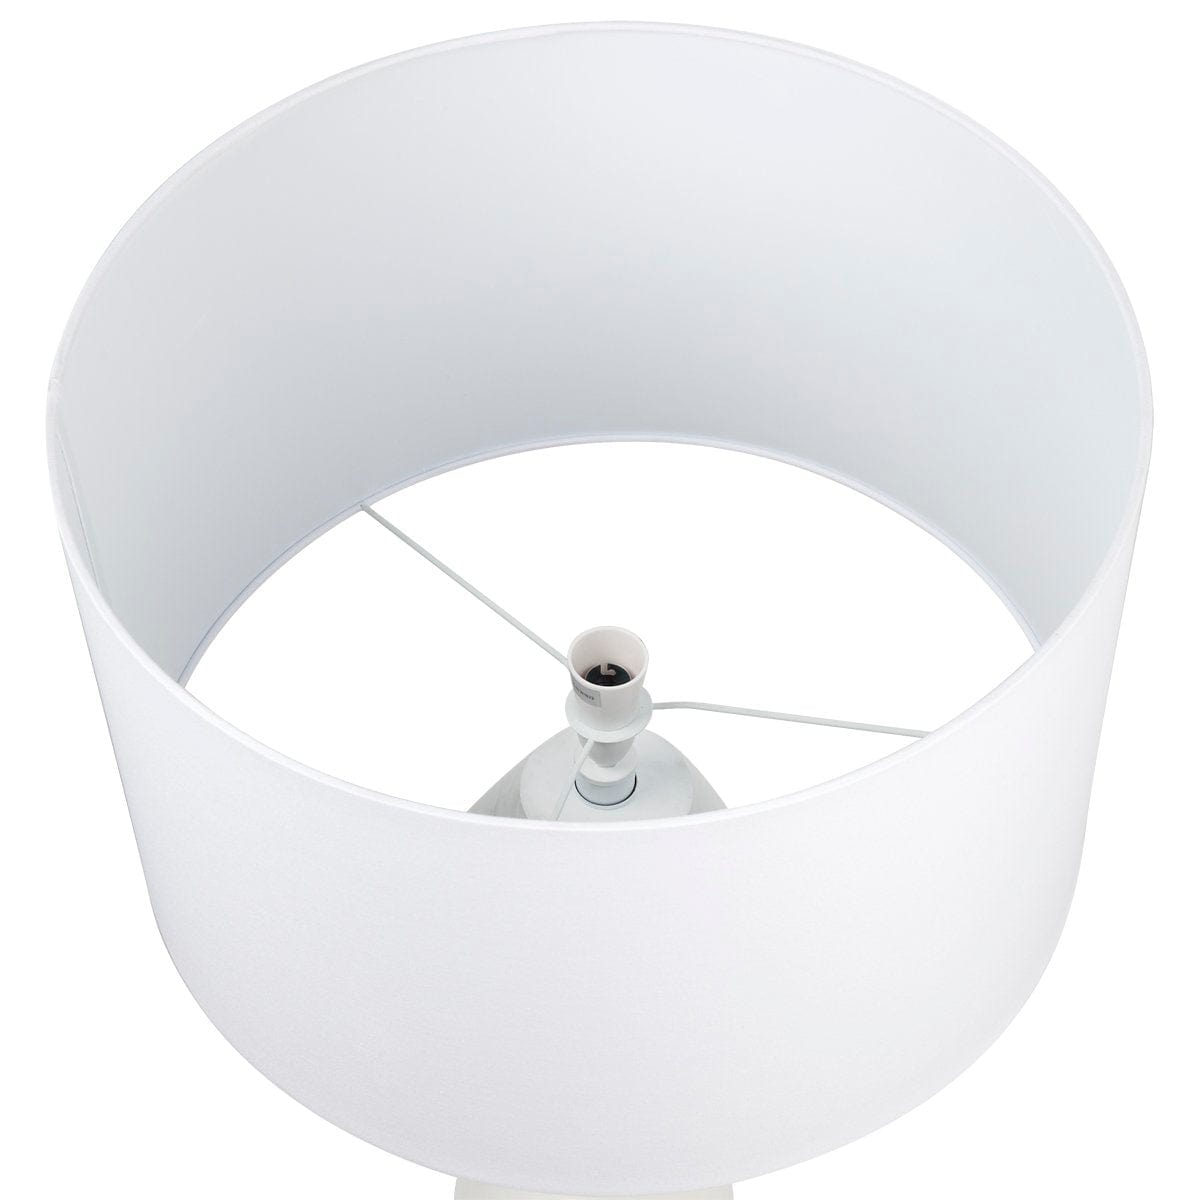 CAFE LIGHTING & LIVING Floor Standing Lamps Abstract Floor Lamp - White B12283